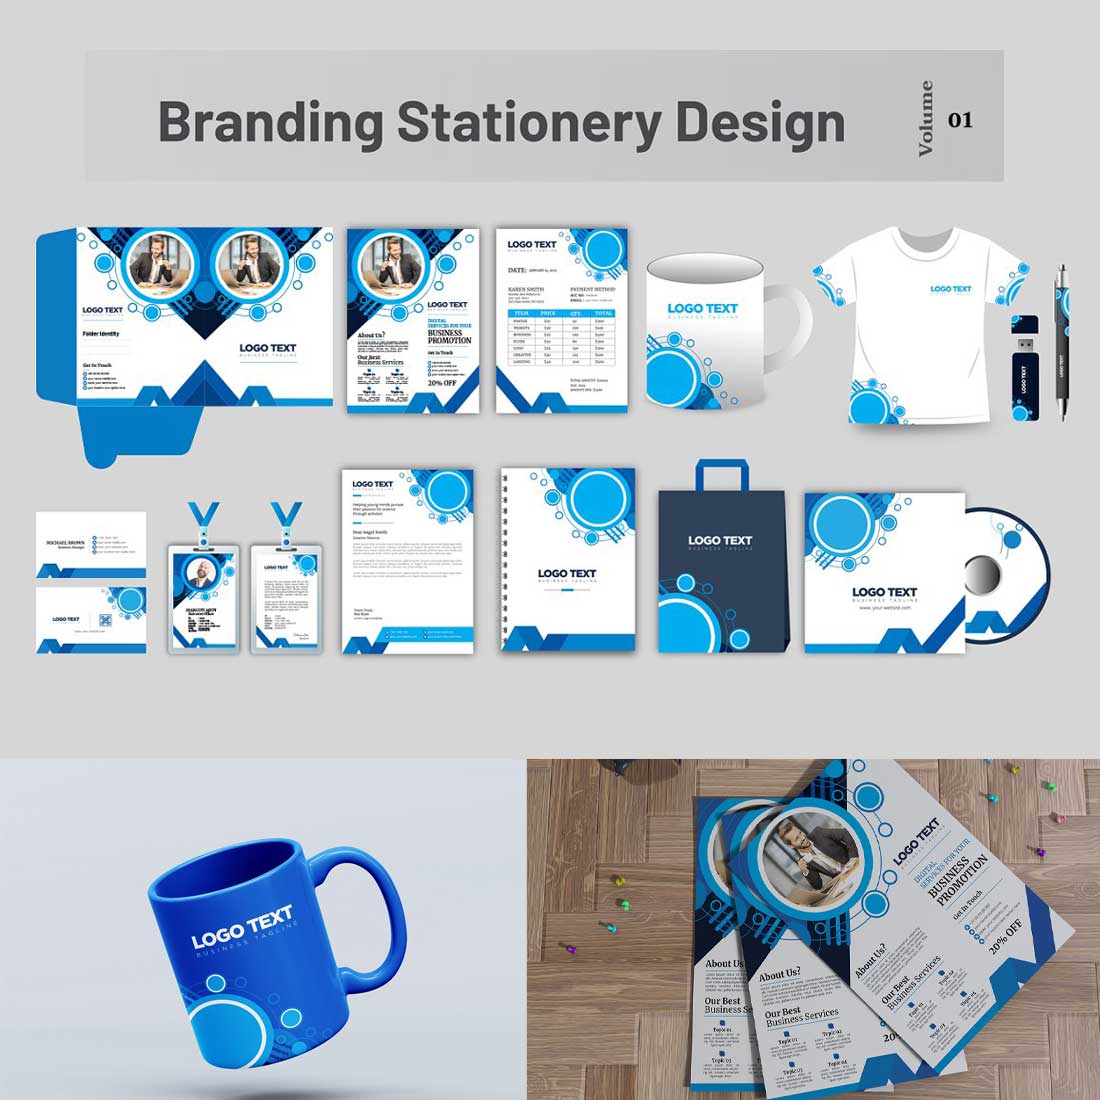 Corporate Branding Stationery Design V-01 cover image.